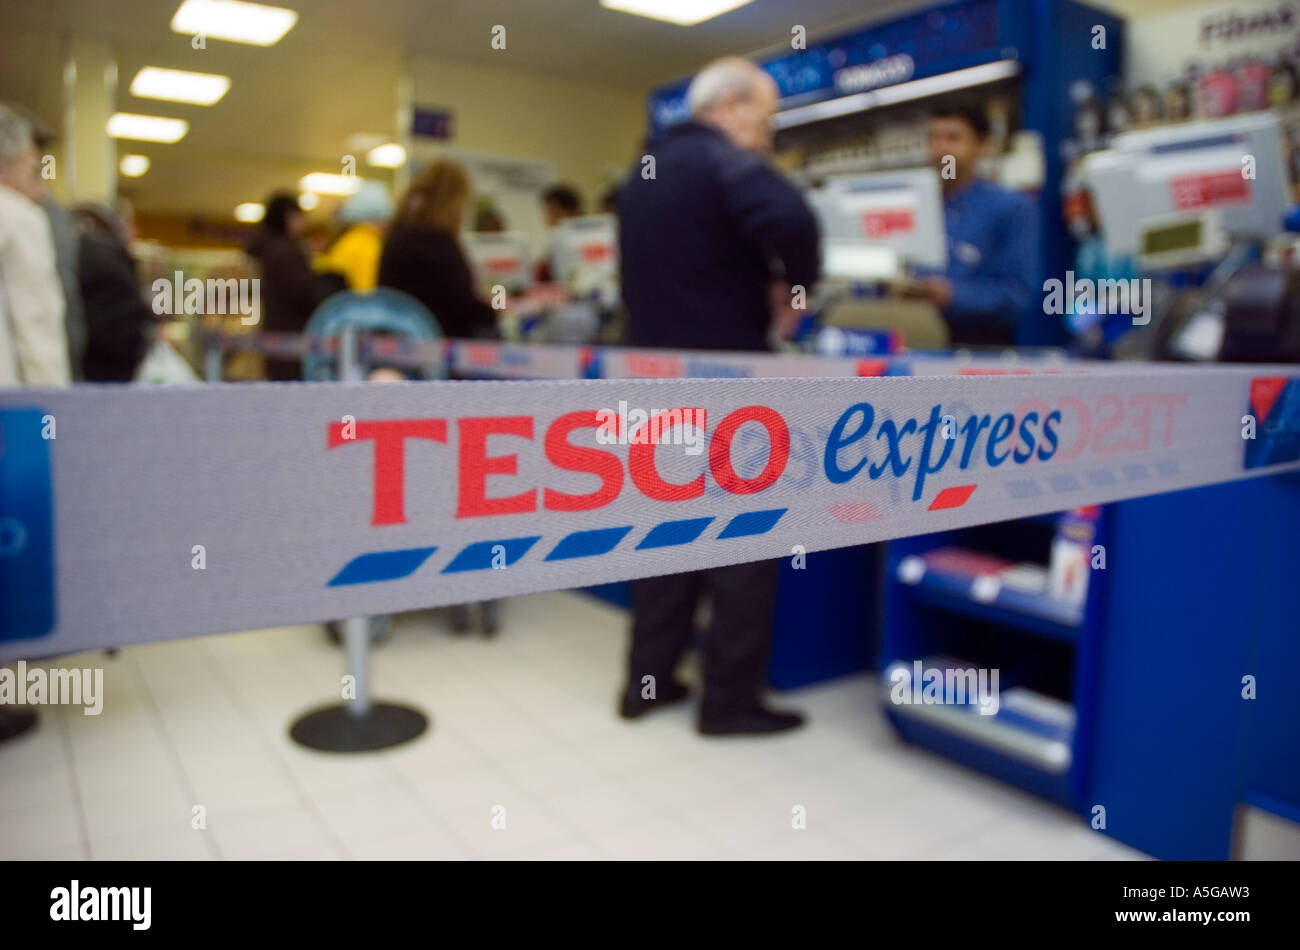 Tesco Express sign in Cardiff, UK. Stock Photo